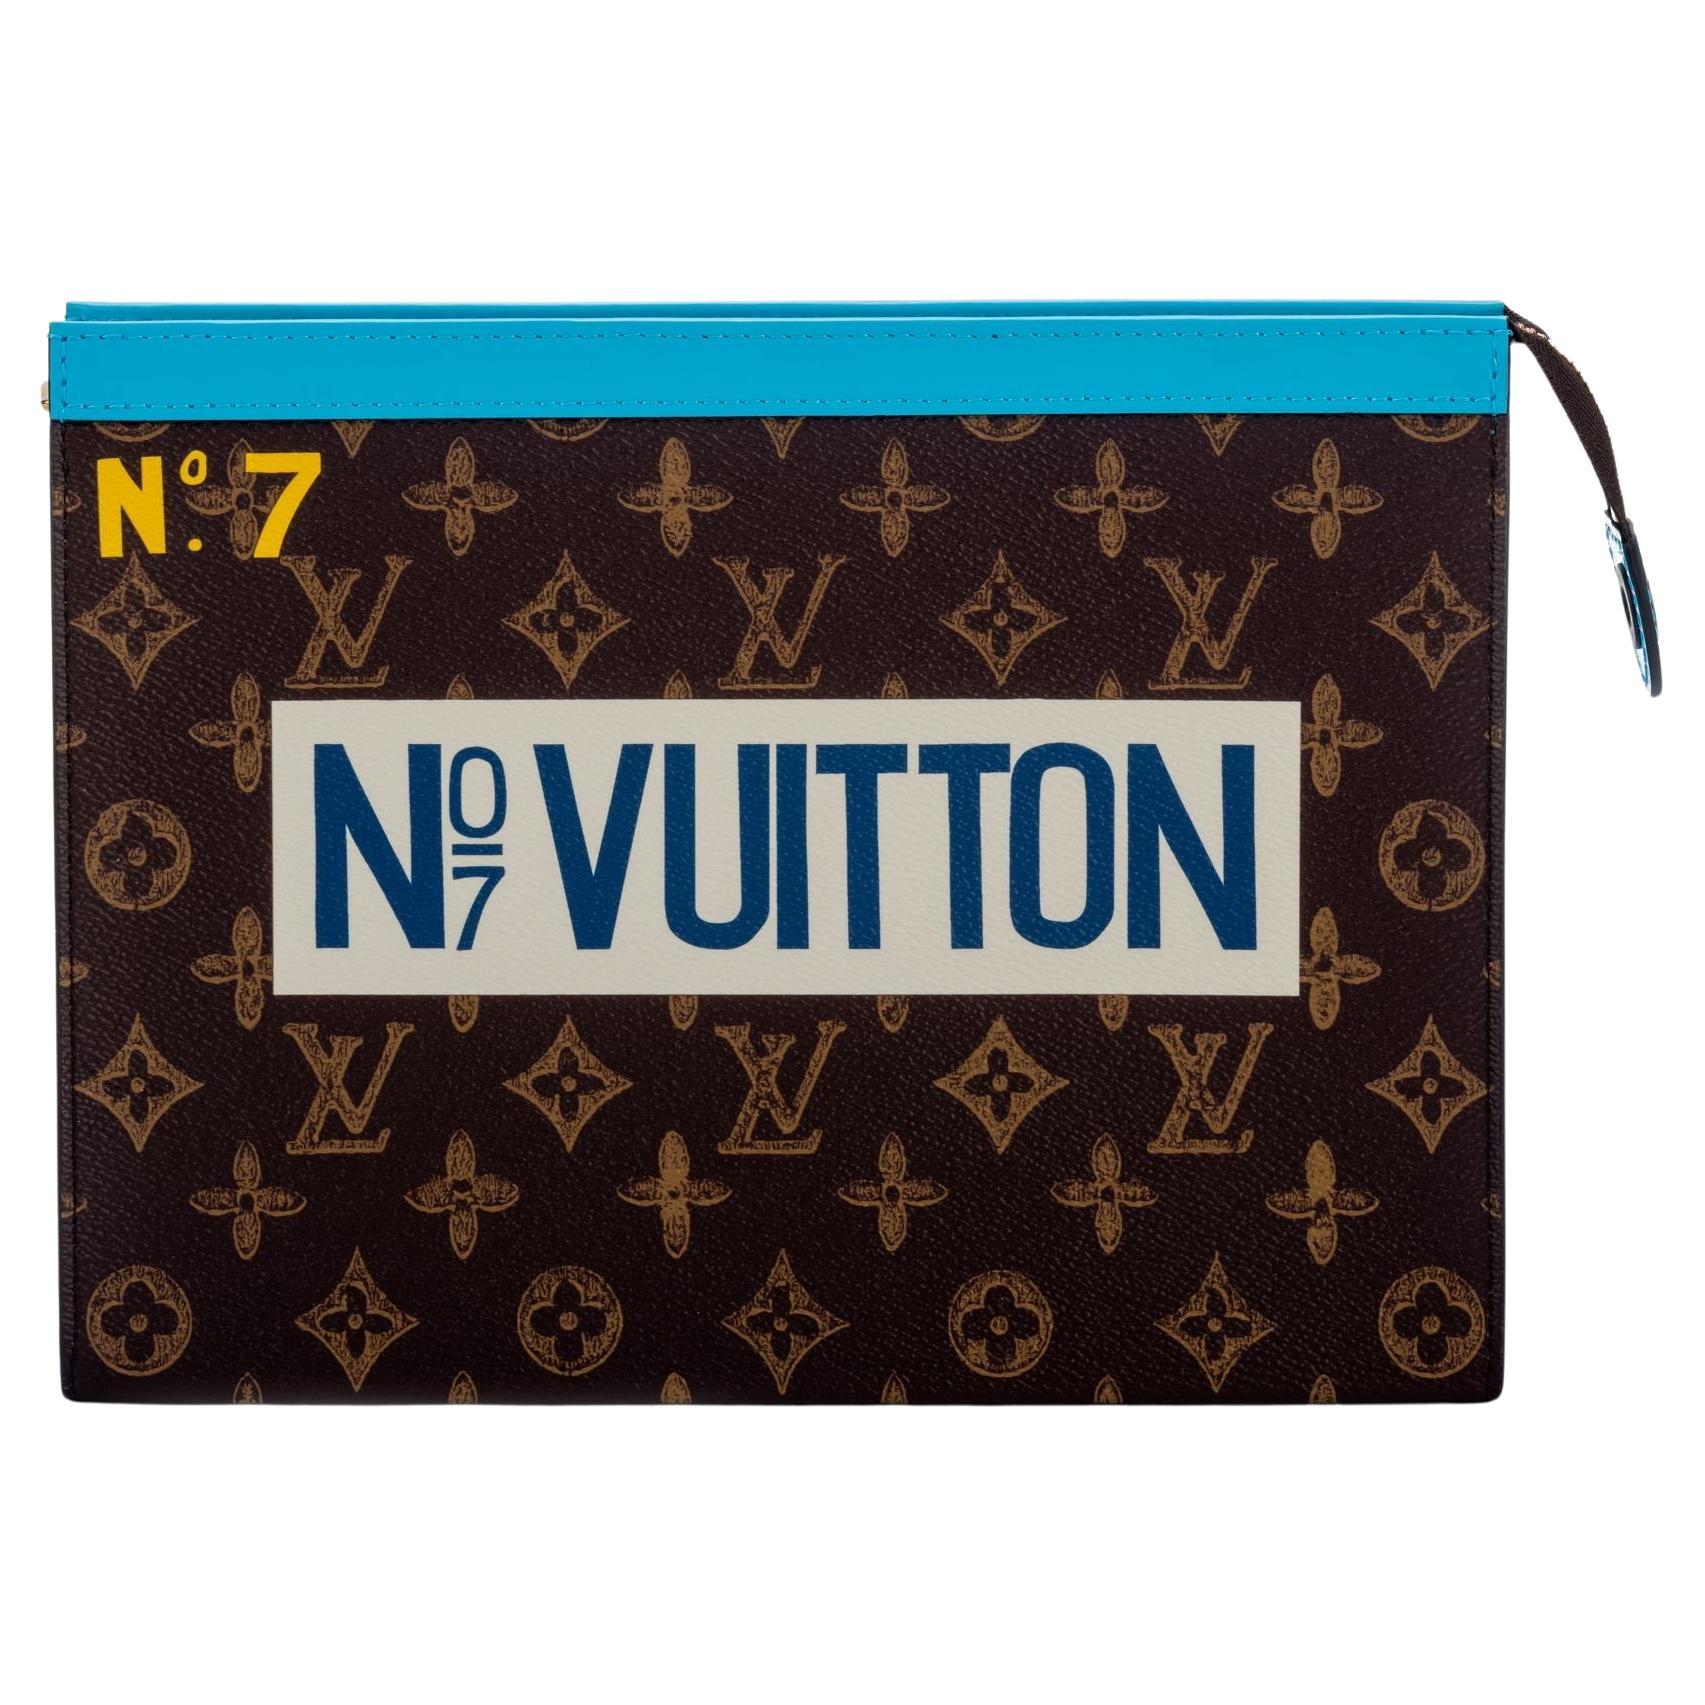 3 Louis Vuitton Men's Pochette For The Price Of 1?! - Shout